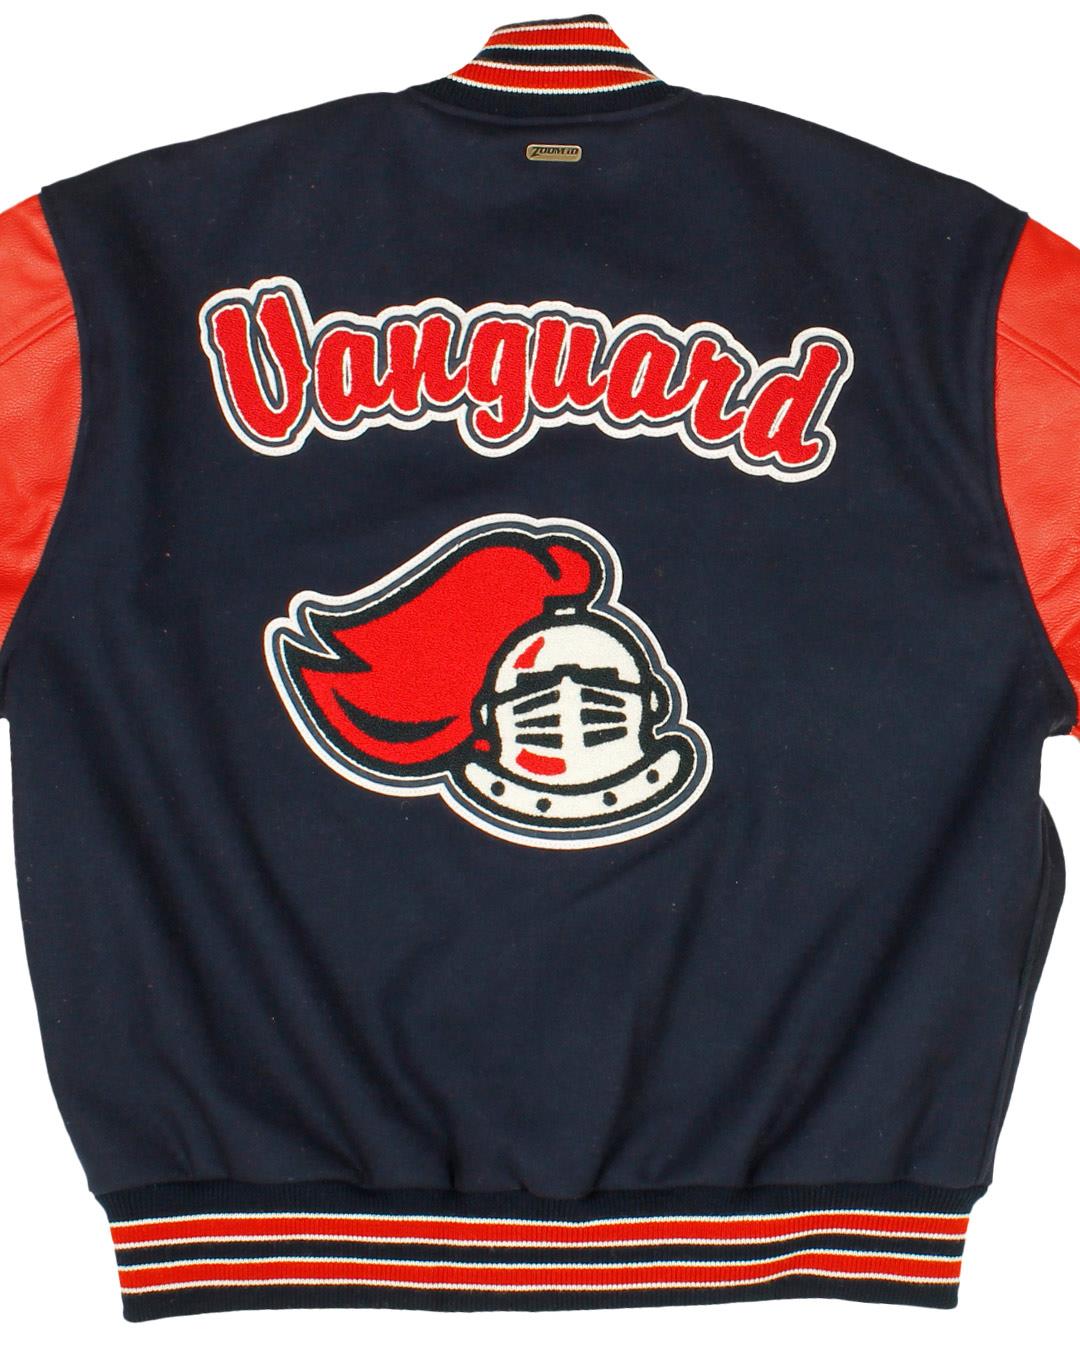 Vanguard High School Letterman Jacket, Ocala FL - Back